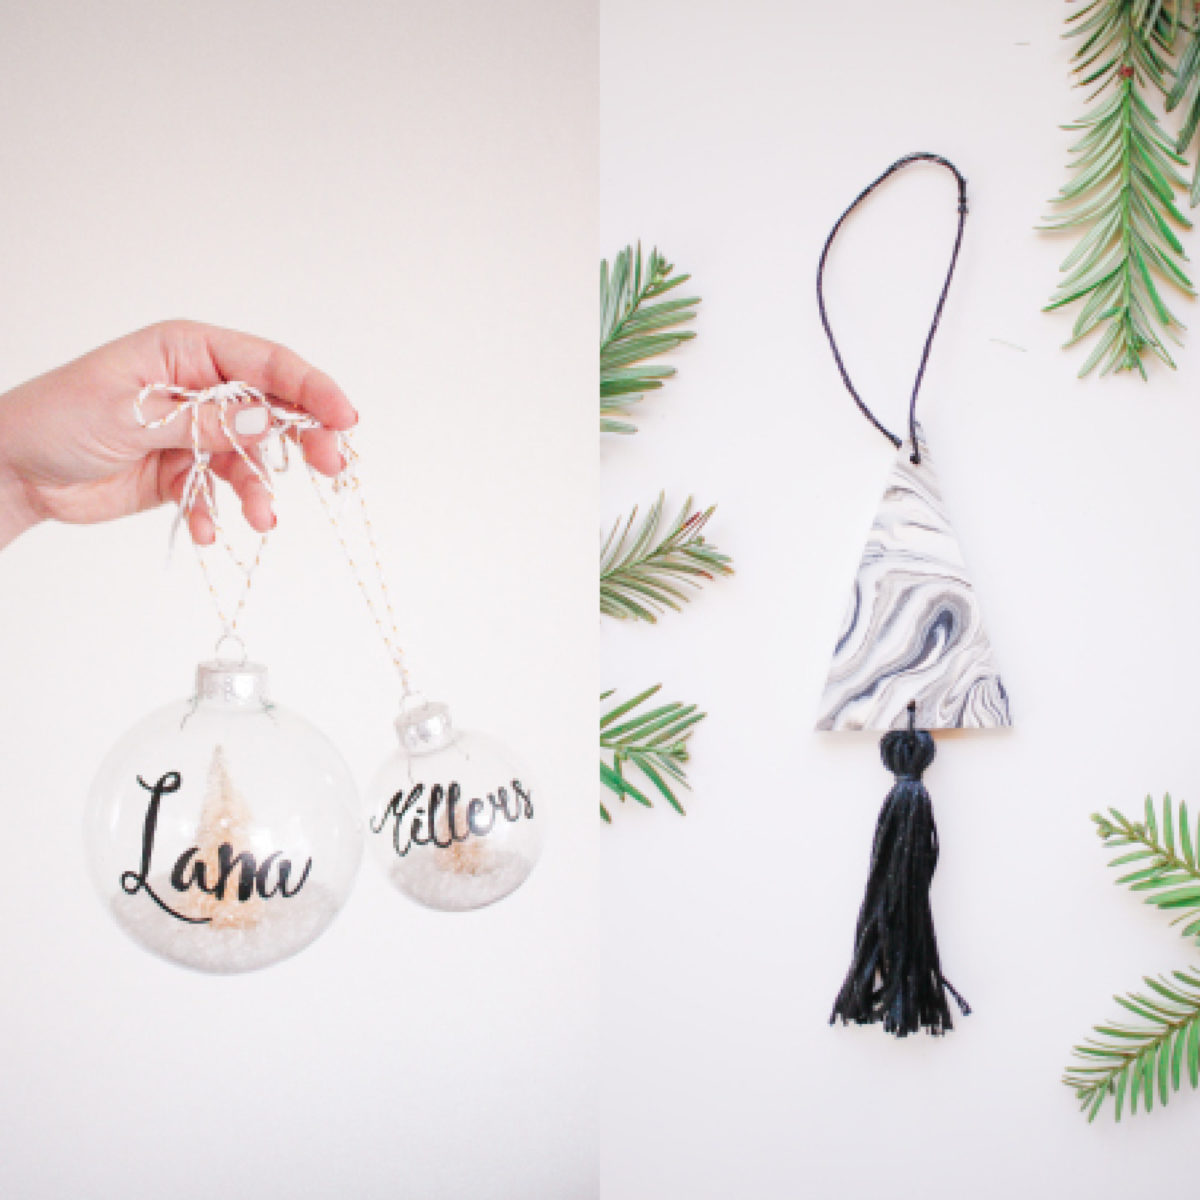 2-easy-diy-ornaments-snow-globe-tassle-tree-modern-1